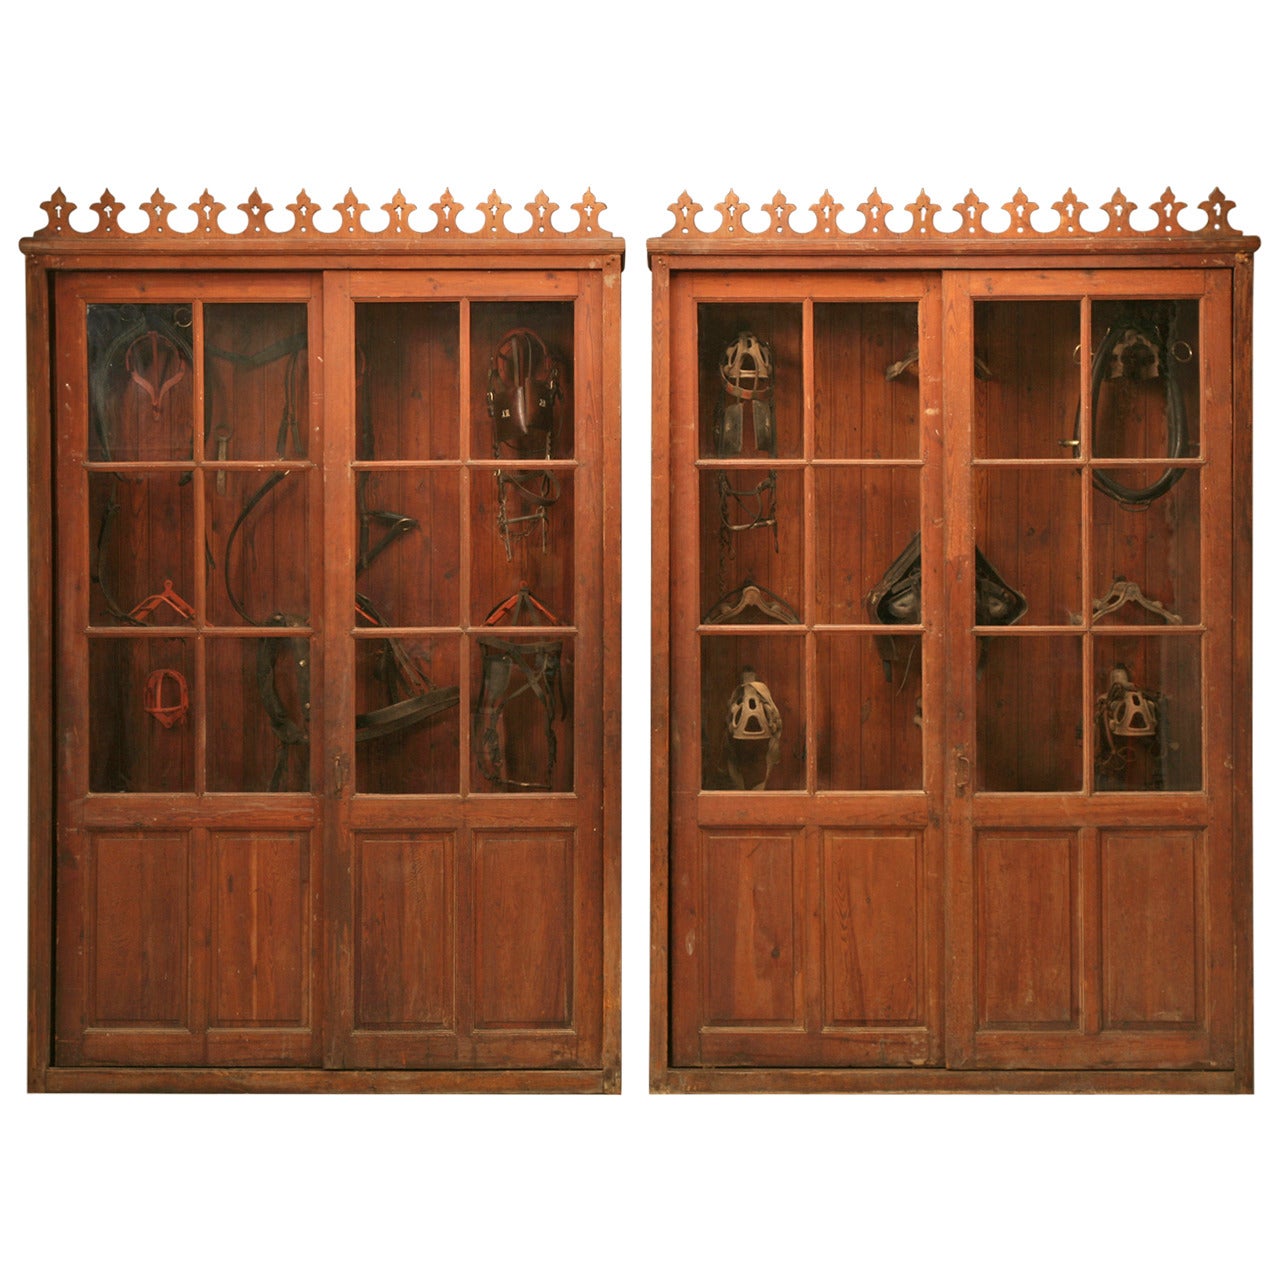 Pair of Cabinets from a French Vineyard, Original Patina, circa 1880-1900